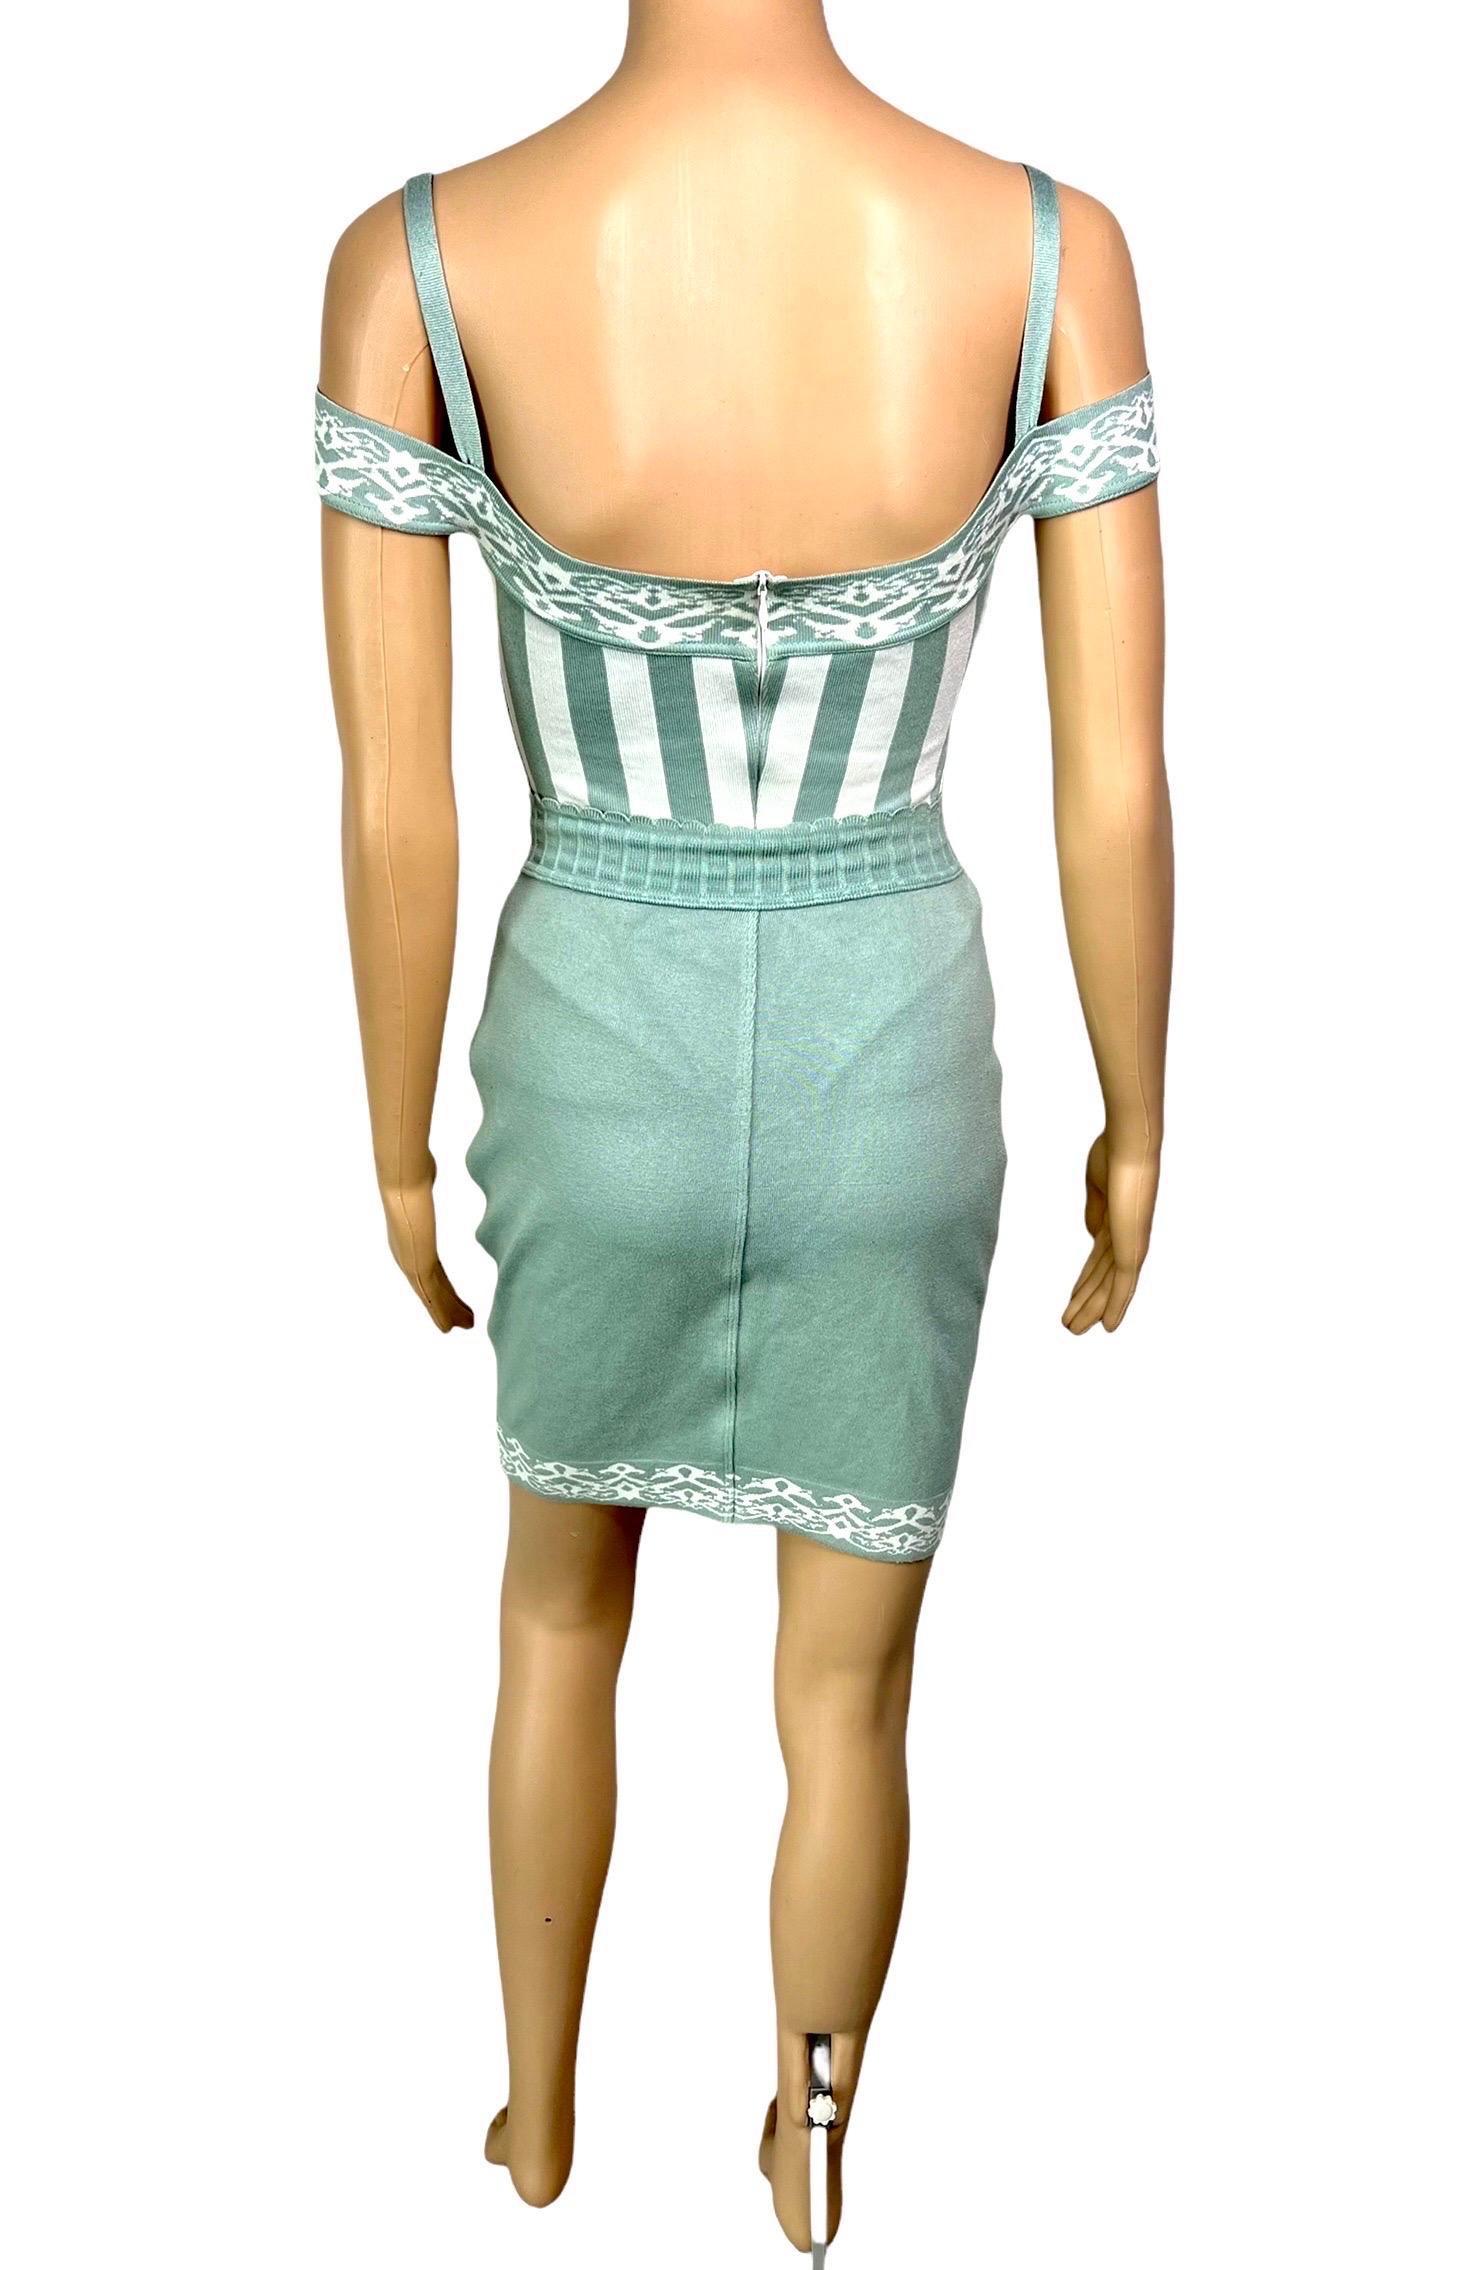 Azzedine Alaia S/S 1992 Vintage Striped Bodysuit Top and Mini Skirt 2 Piece Set For Sale 5